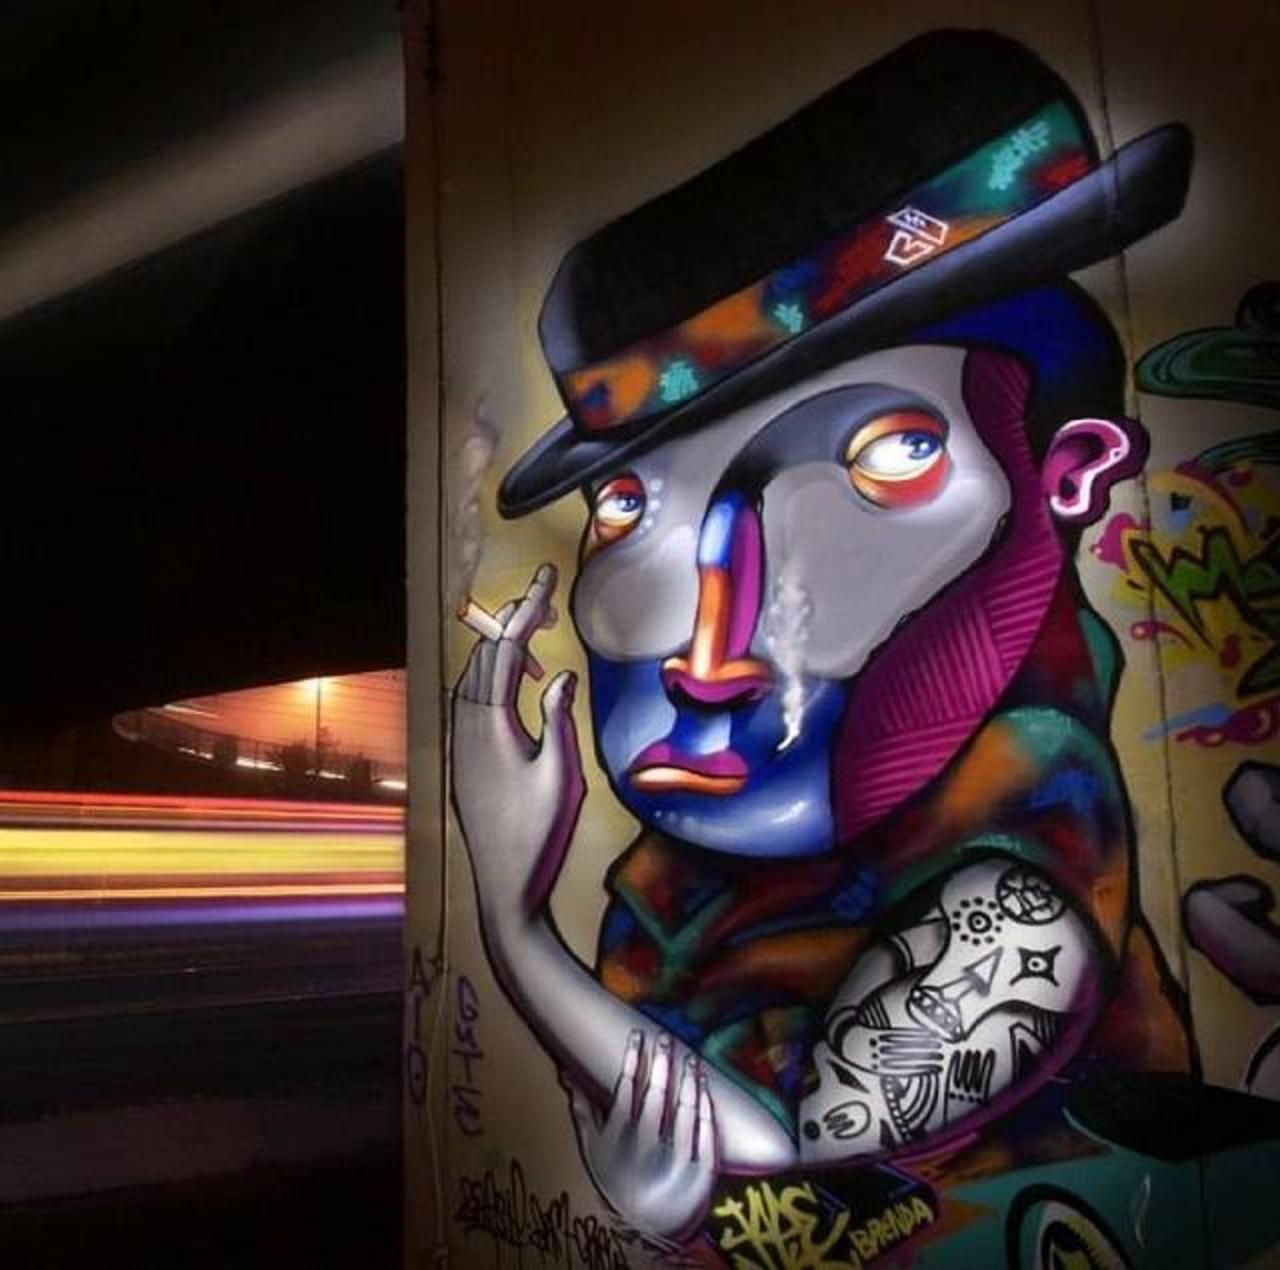 Abstract Street Art by Jade Rivera 

#art #mural #graffiti #streetart http://t.co/92Sjk4SqXz